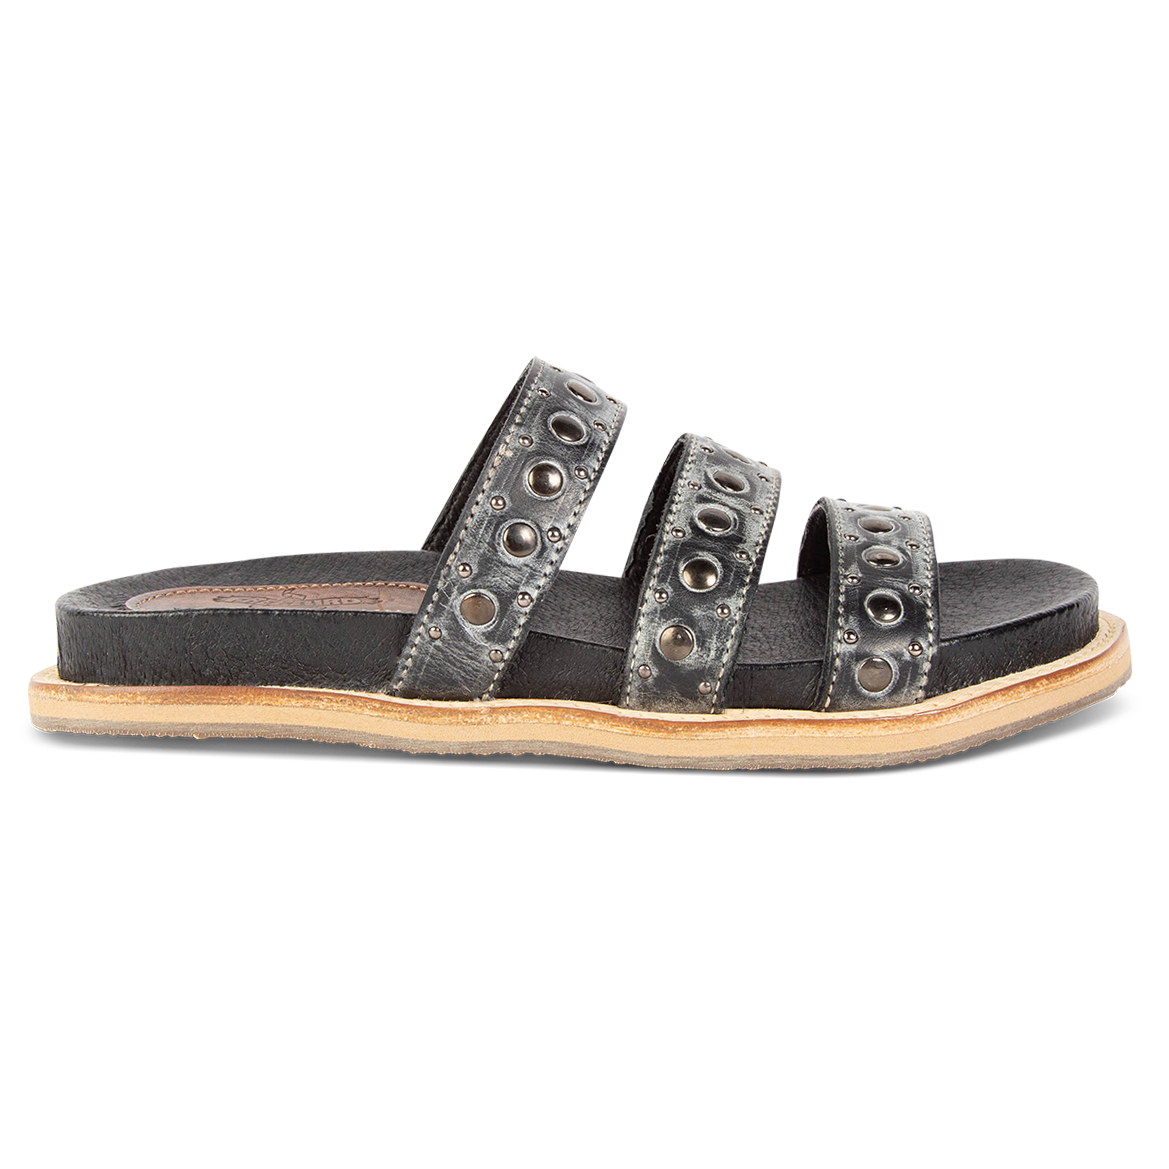 FREEBIRD women's Florence black slip-on flat shoe featuring 3 straps with metal studs